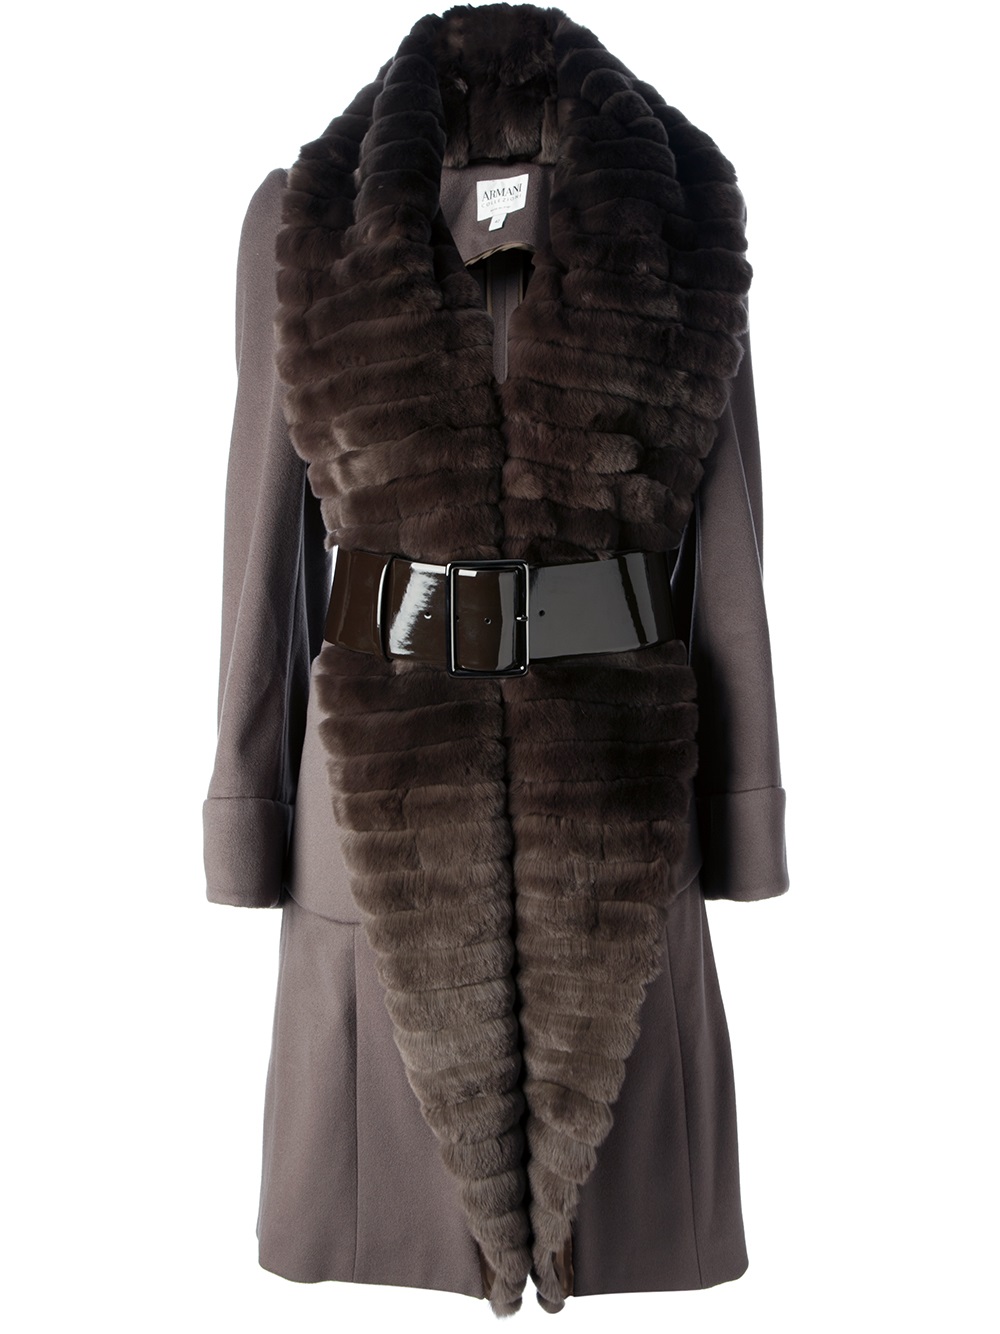 Lyst - Armani Fur Lapels Overcoat in Brown